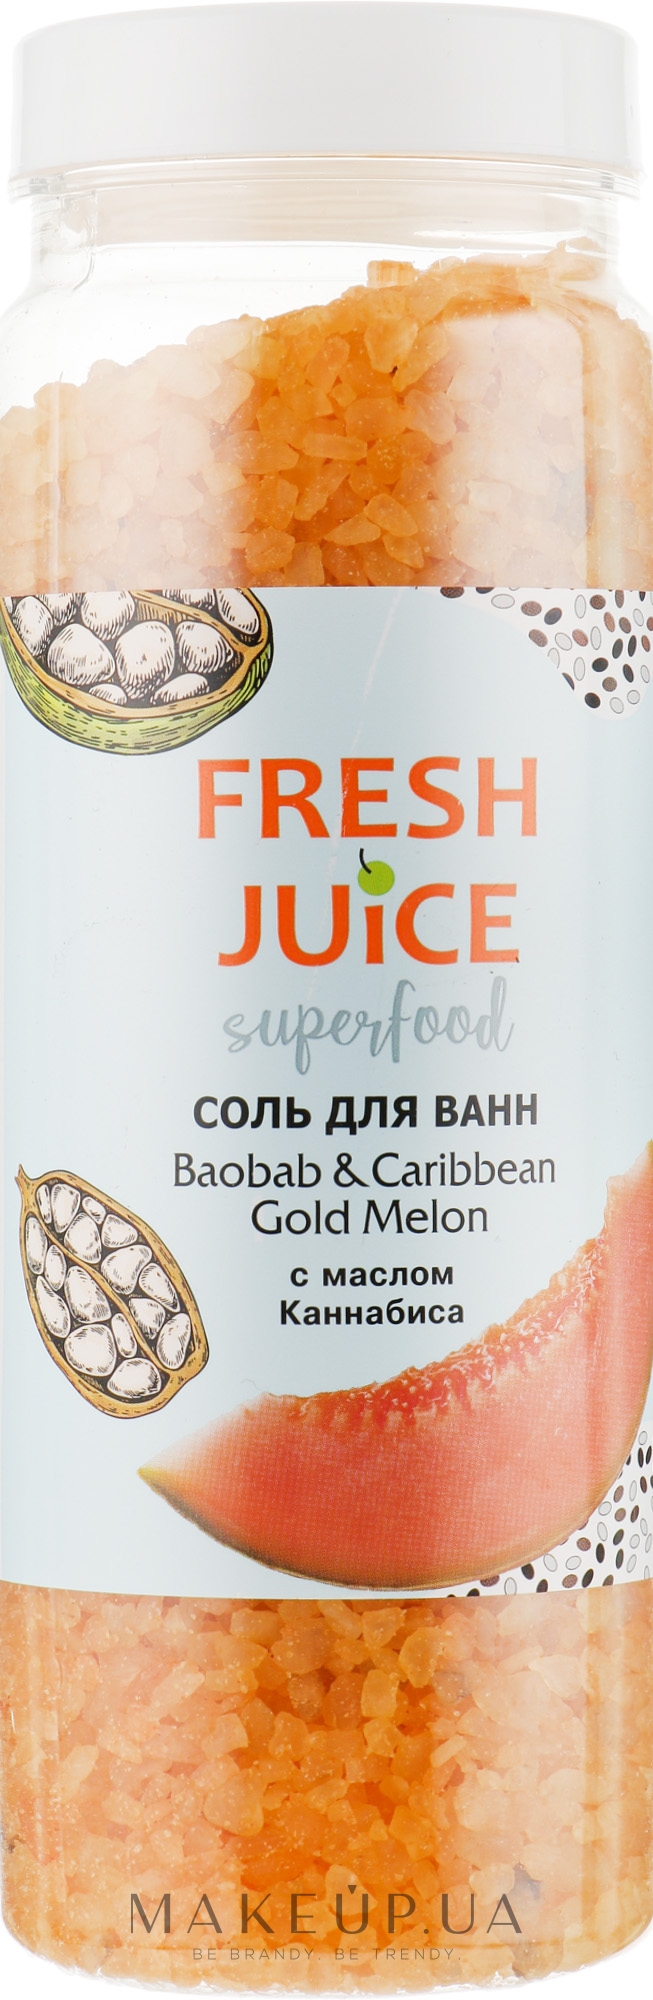 Соль для ванн "Баобаб и Карибская золотая дыня" - Fresh Juice Superfood Baobab & Caribbean Gold Melon  — фото 700g